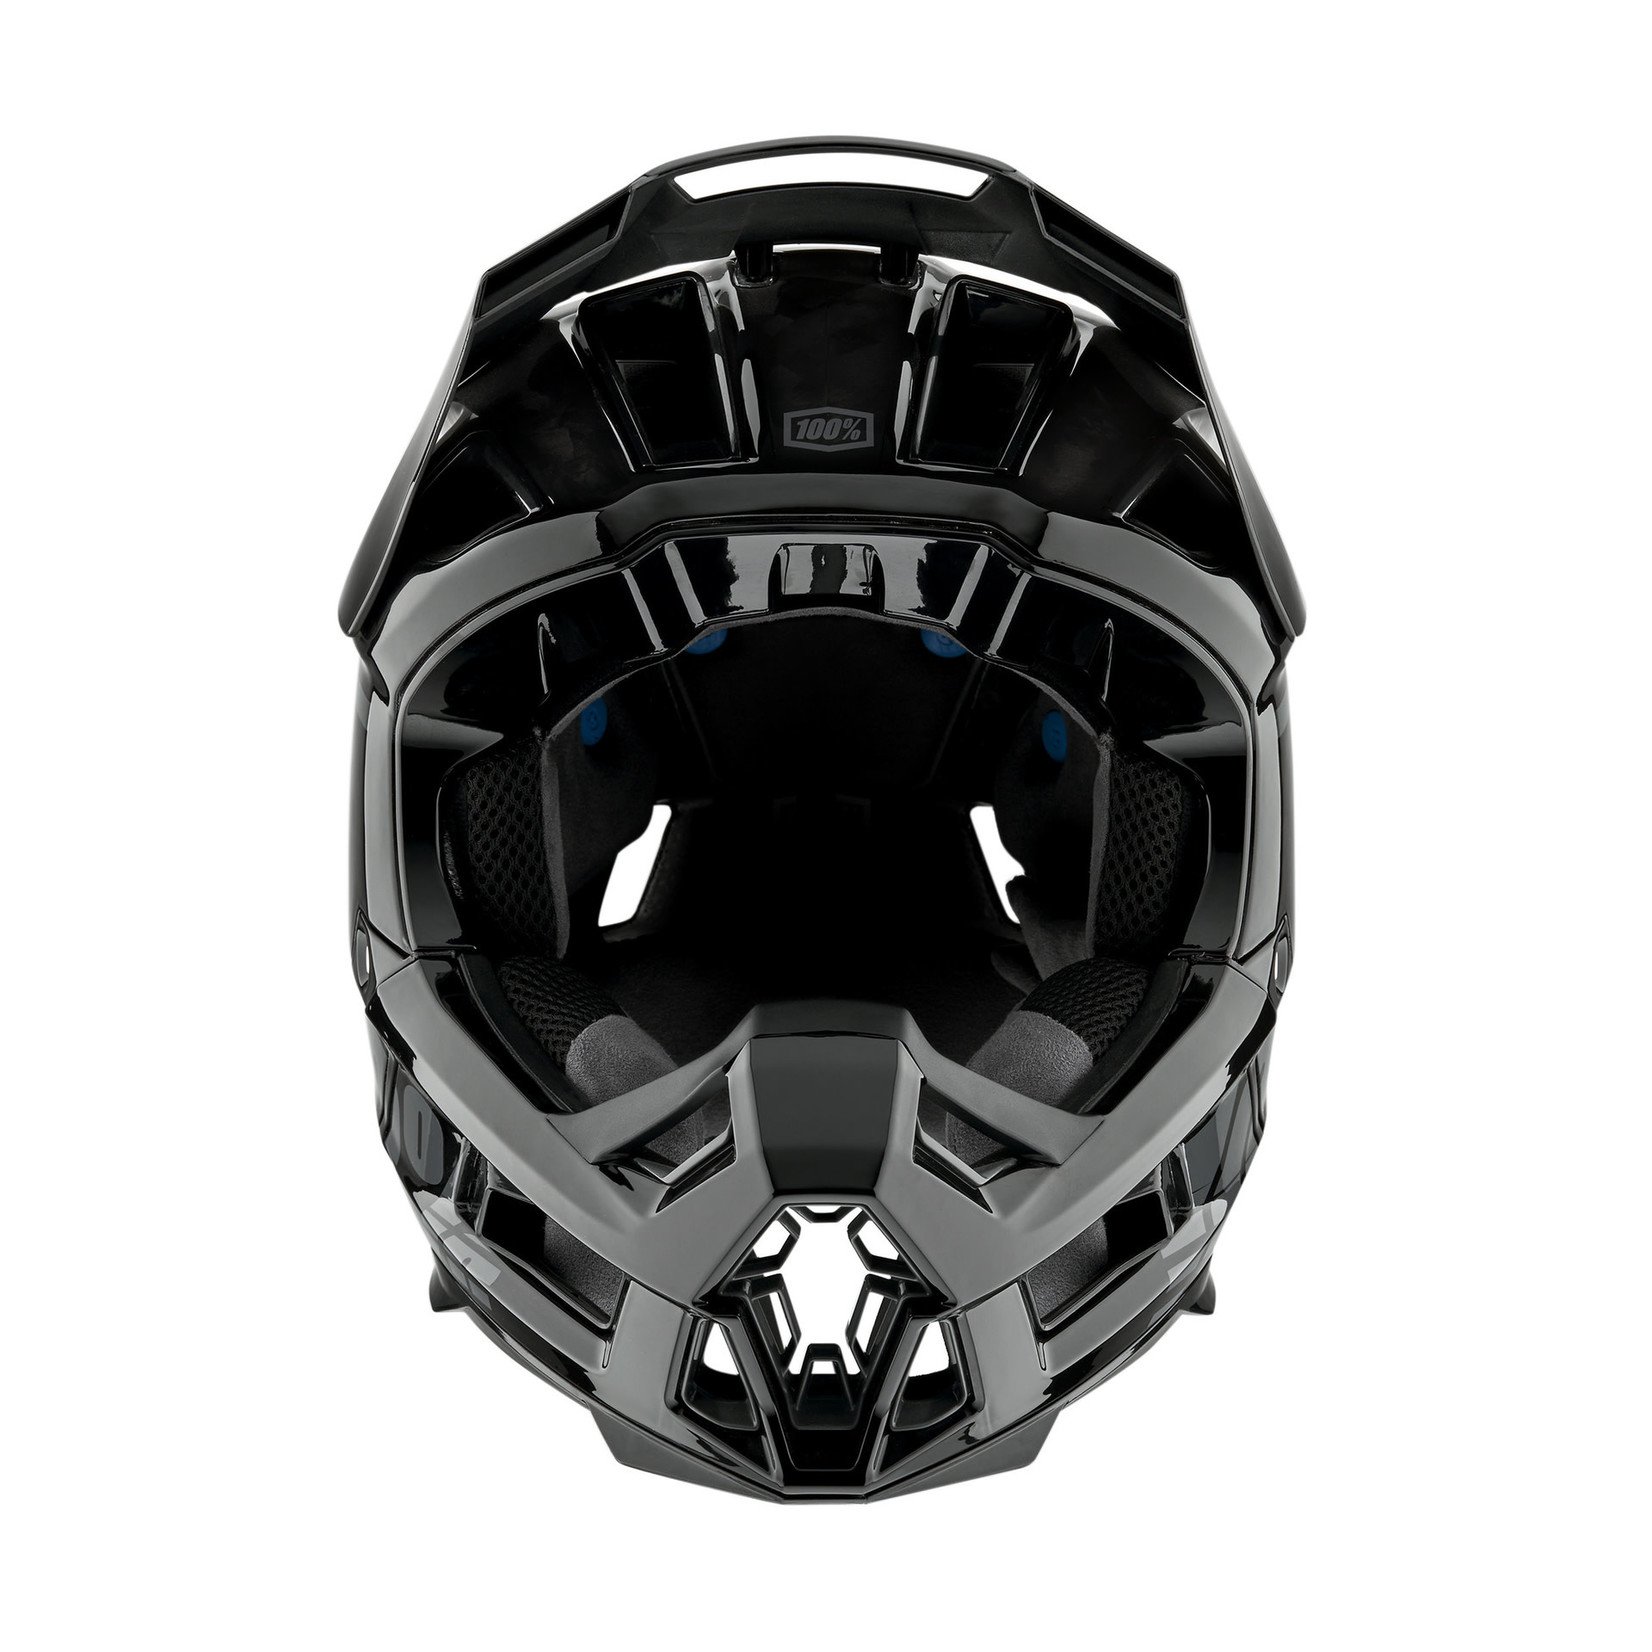 100 Percent 100% Aircraft 2 Carbon Fiber Shell Full Face Downhill Bike Helmet - Black